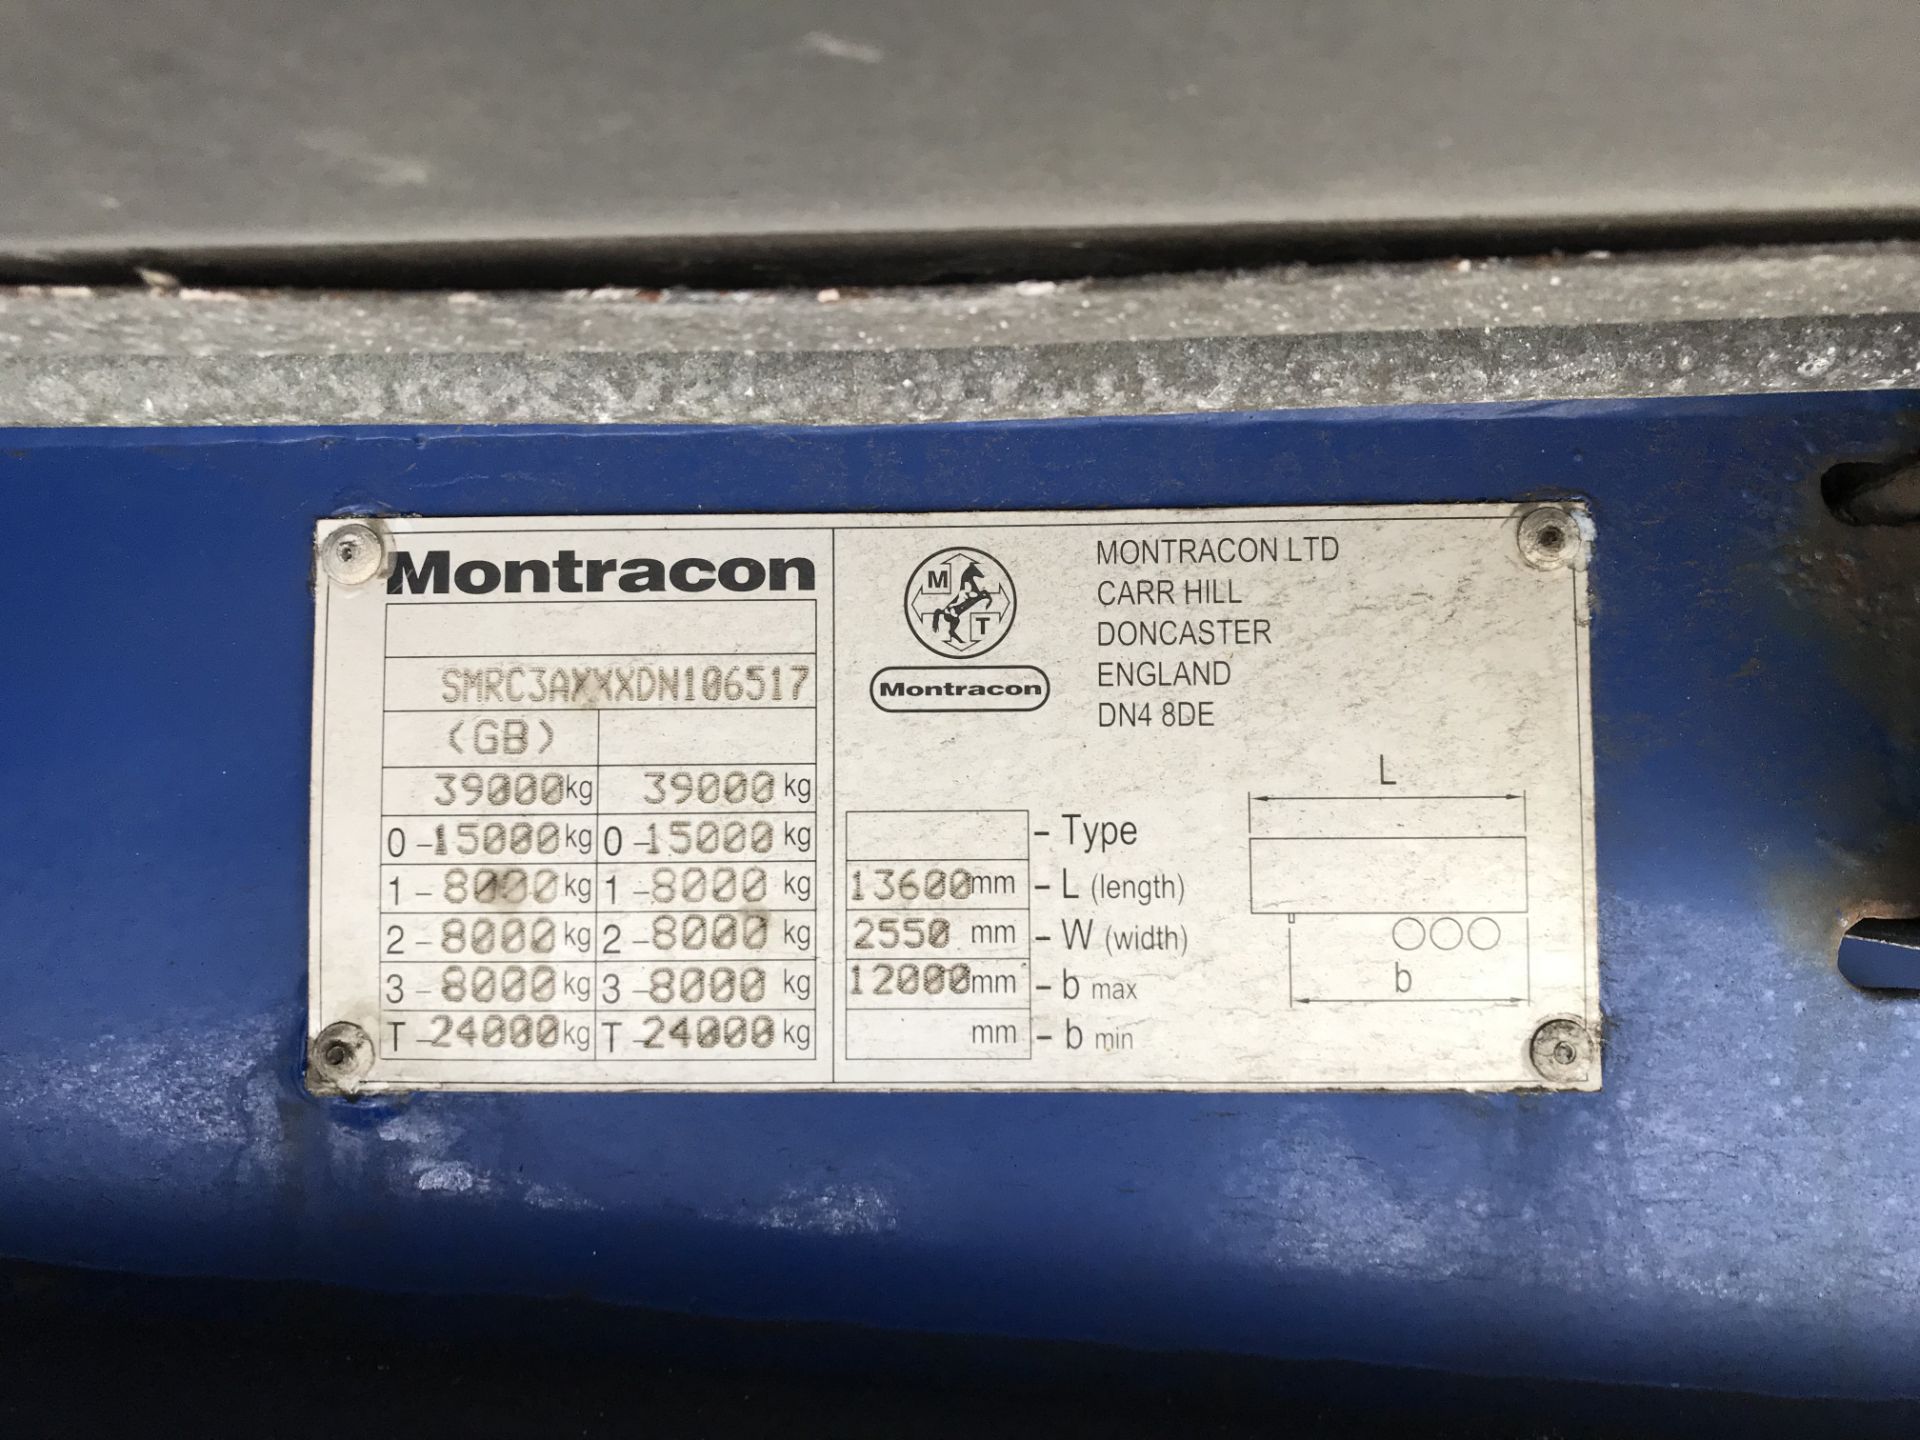 Montracon 13.6m Tri-Axle Curtainside Single Deck Semi-Trailer, chassis no. SMRC3AXXXDN106517, ID no. - Image 6 of 6